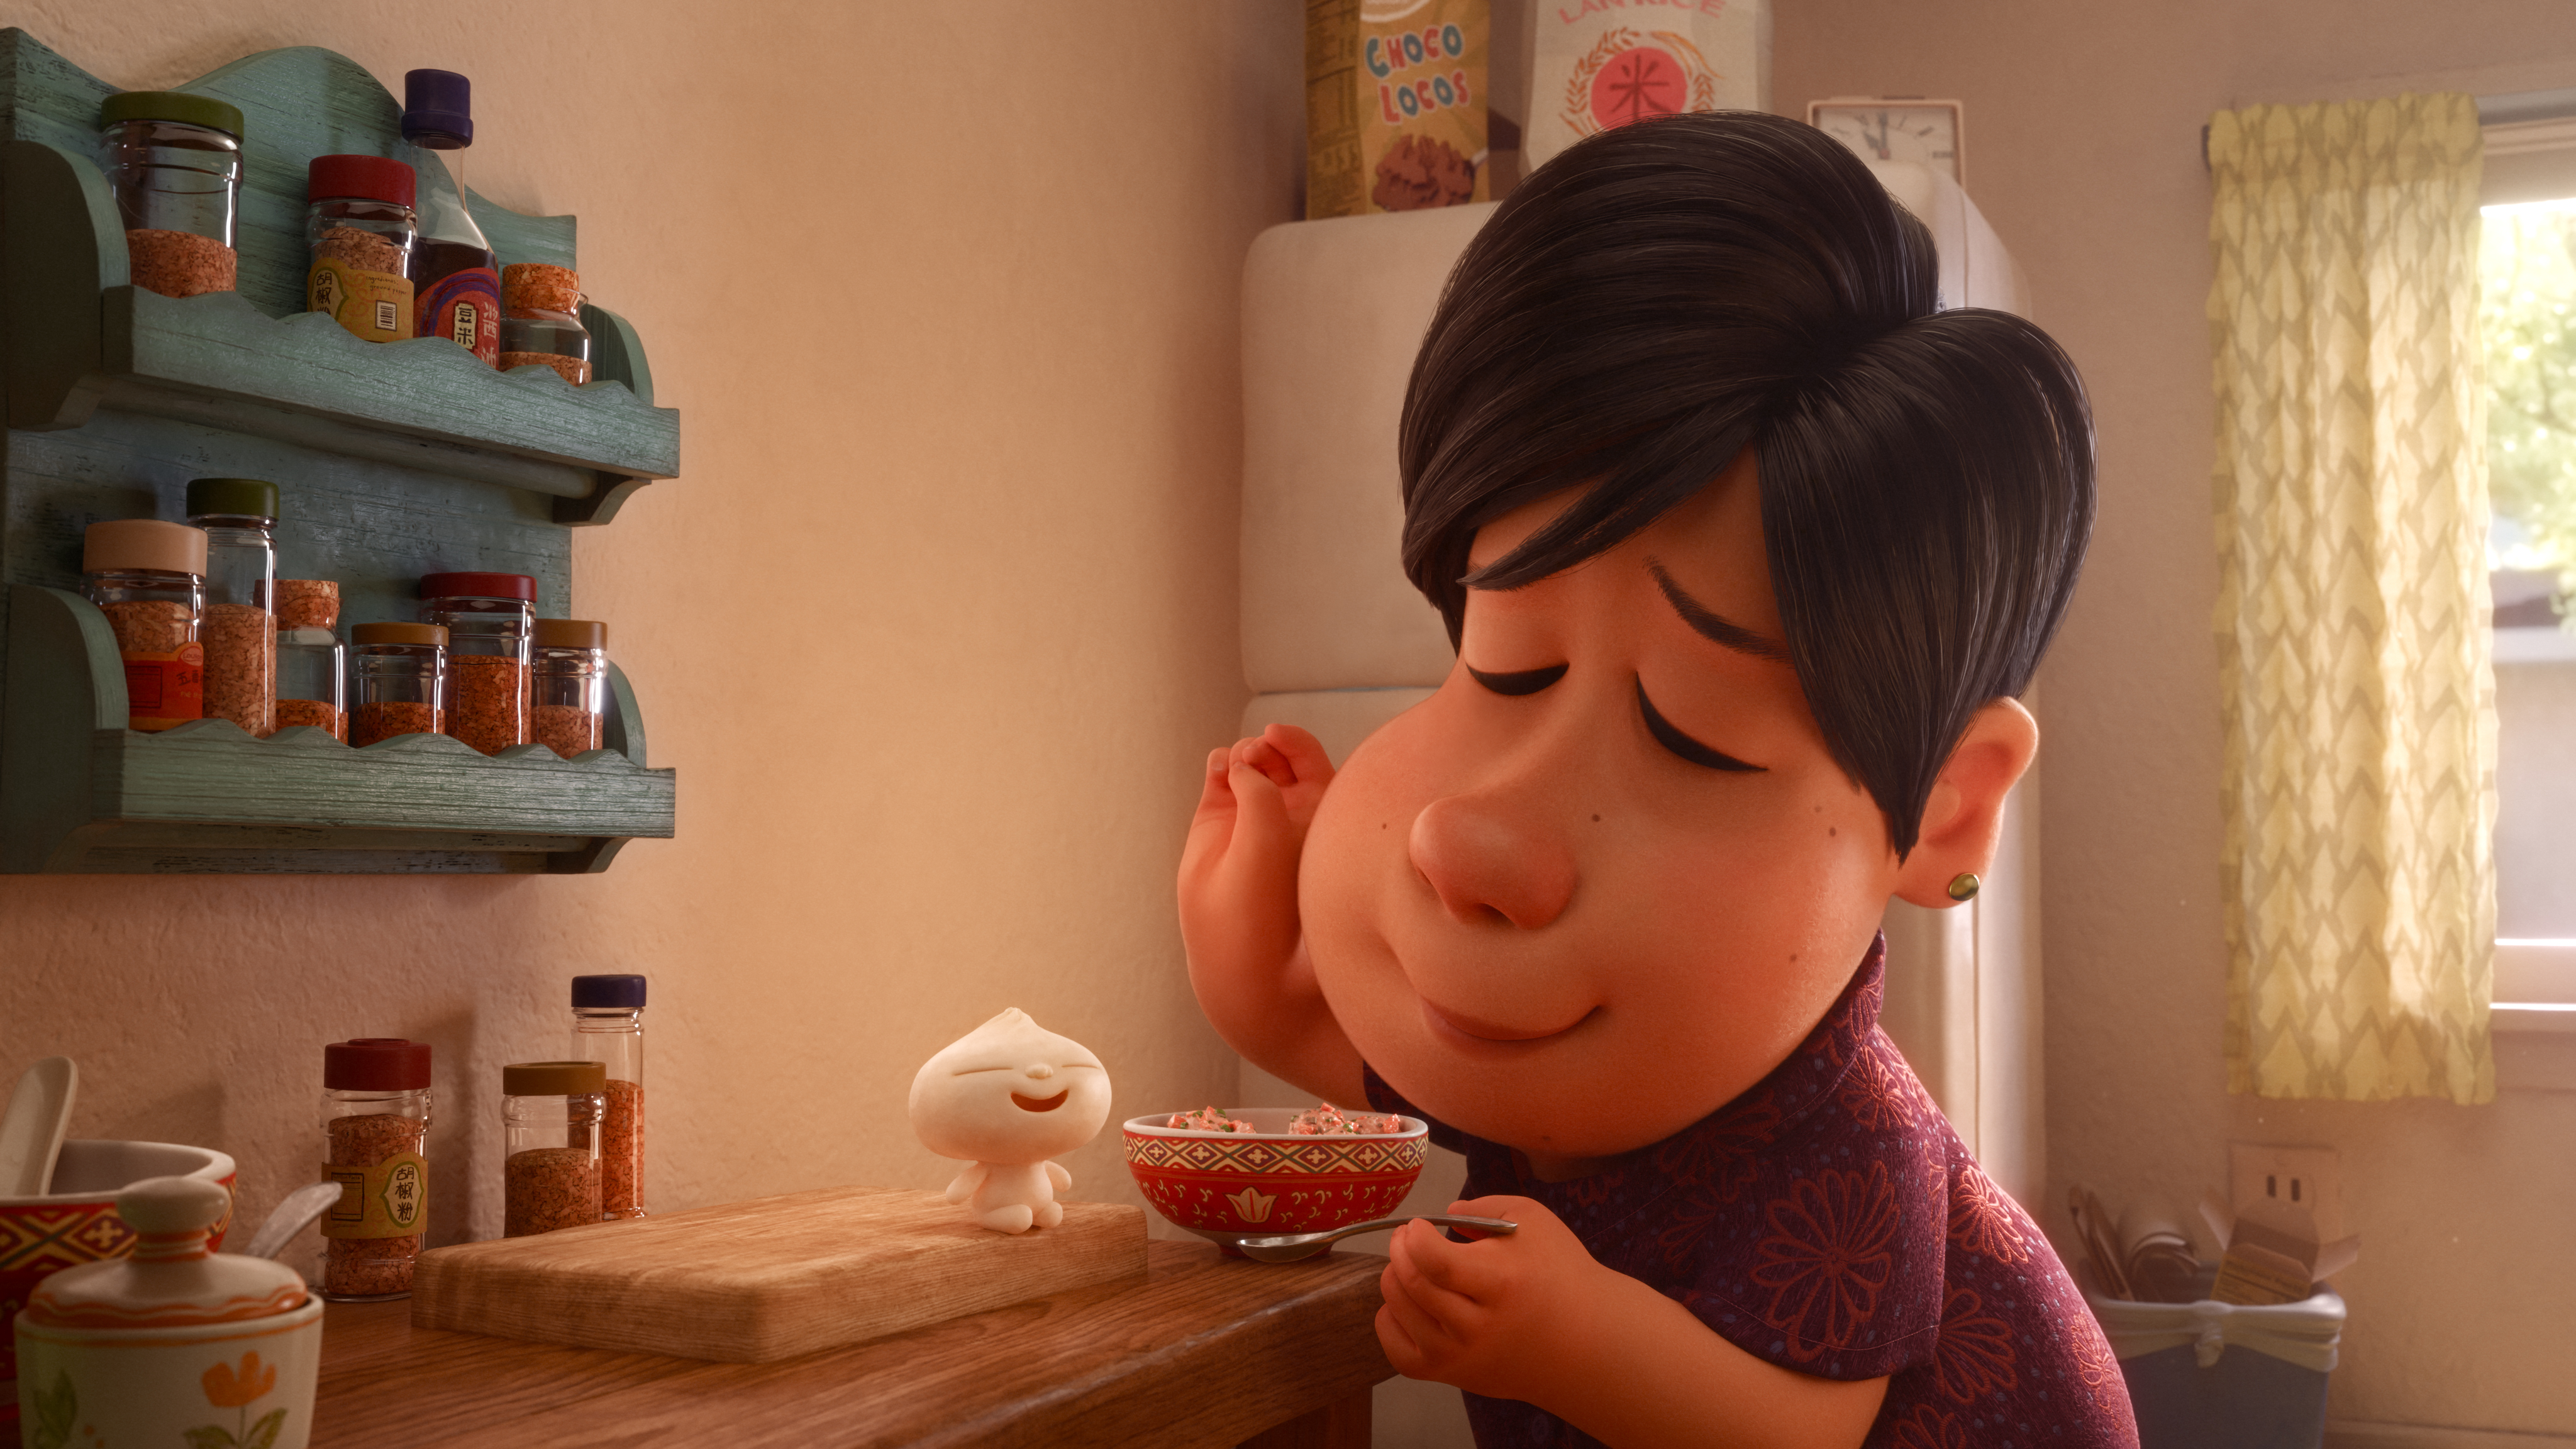 Bao (Pixar&mdash;©2018 Disney)